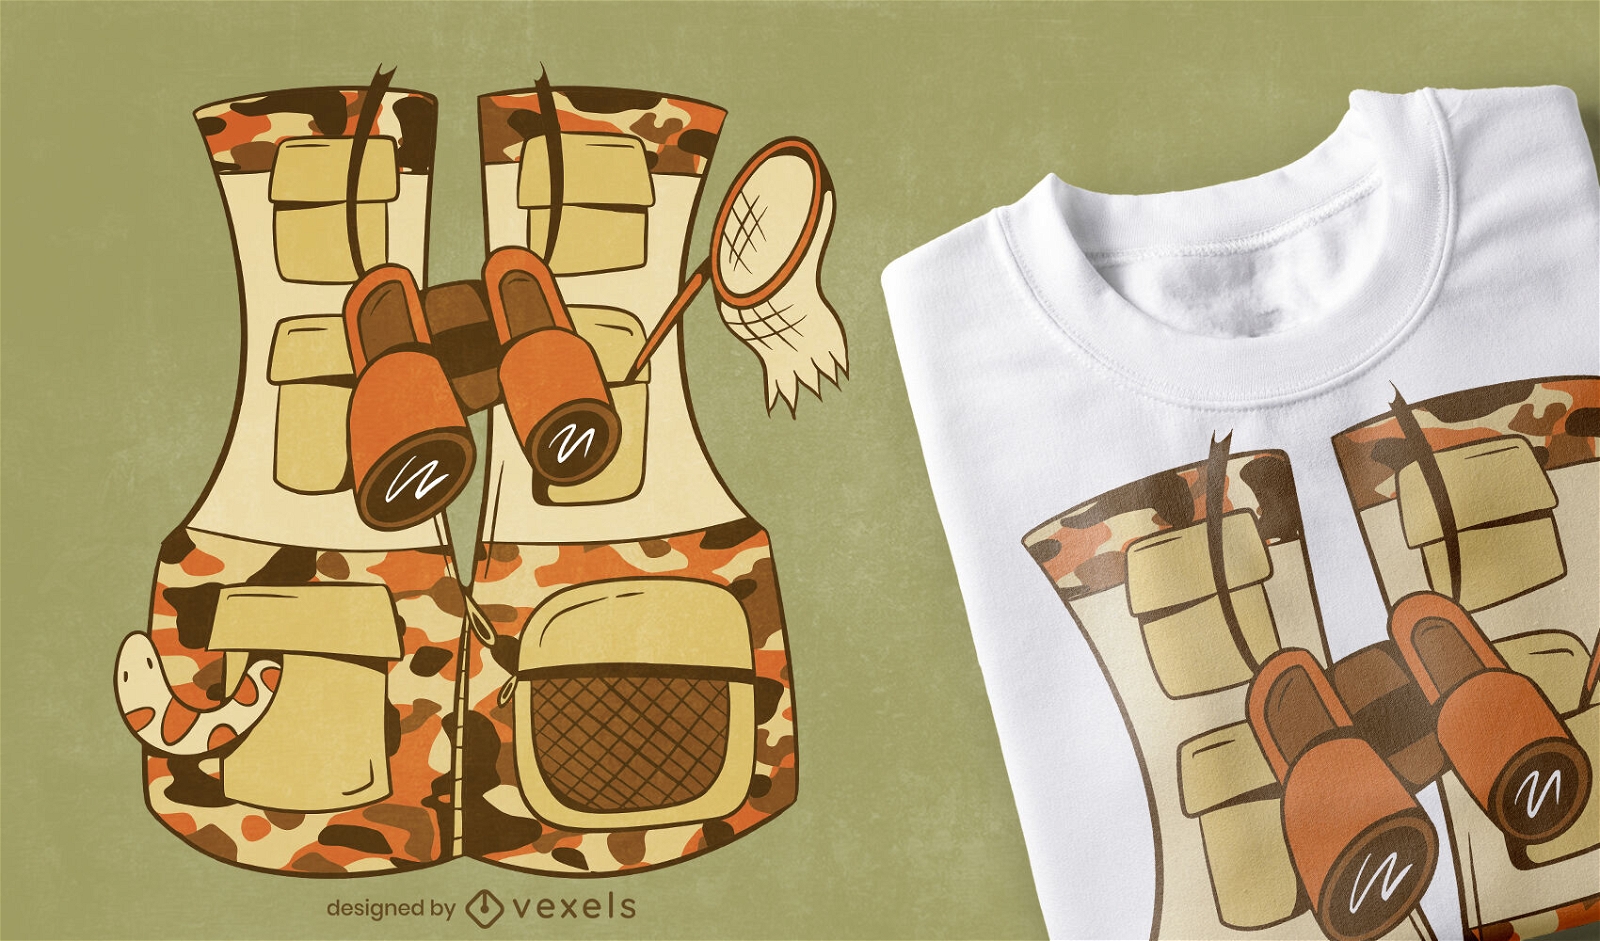 Cool safari vest t-shirt design